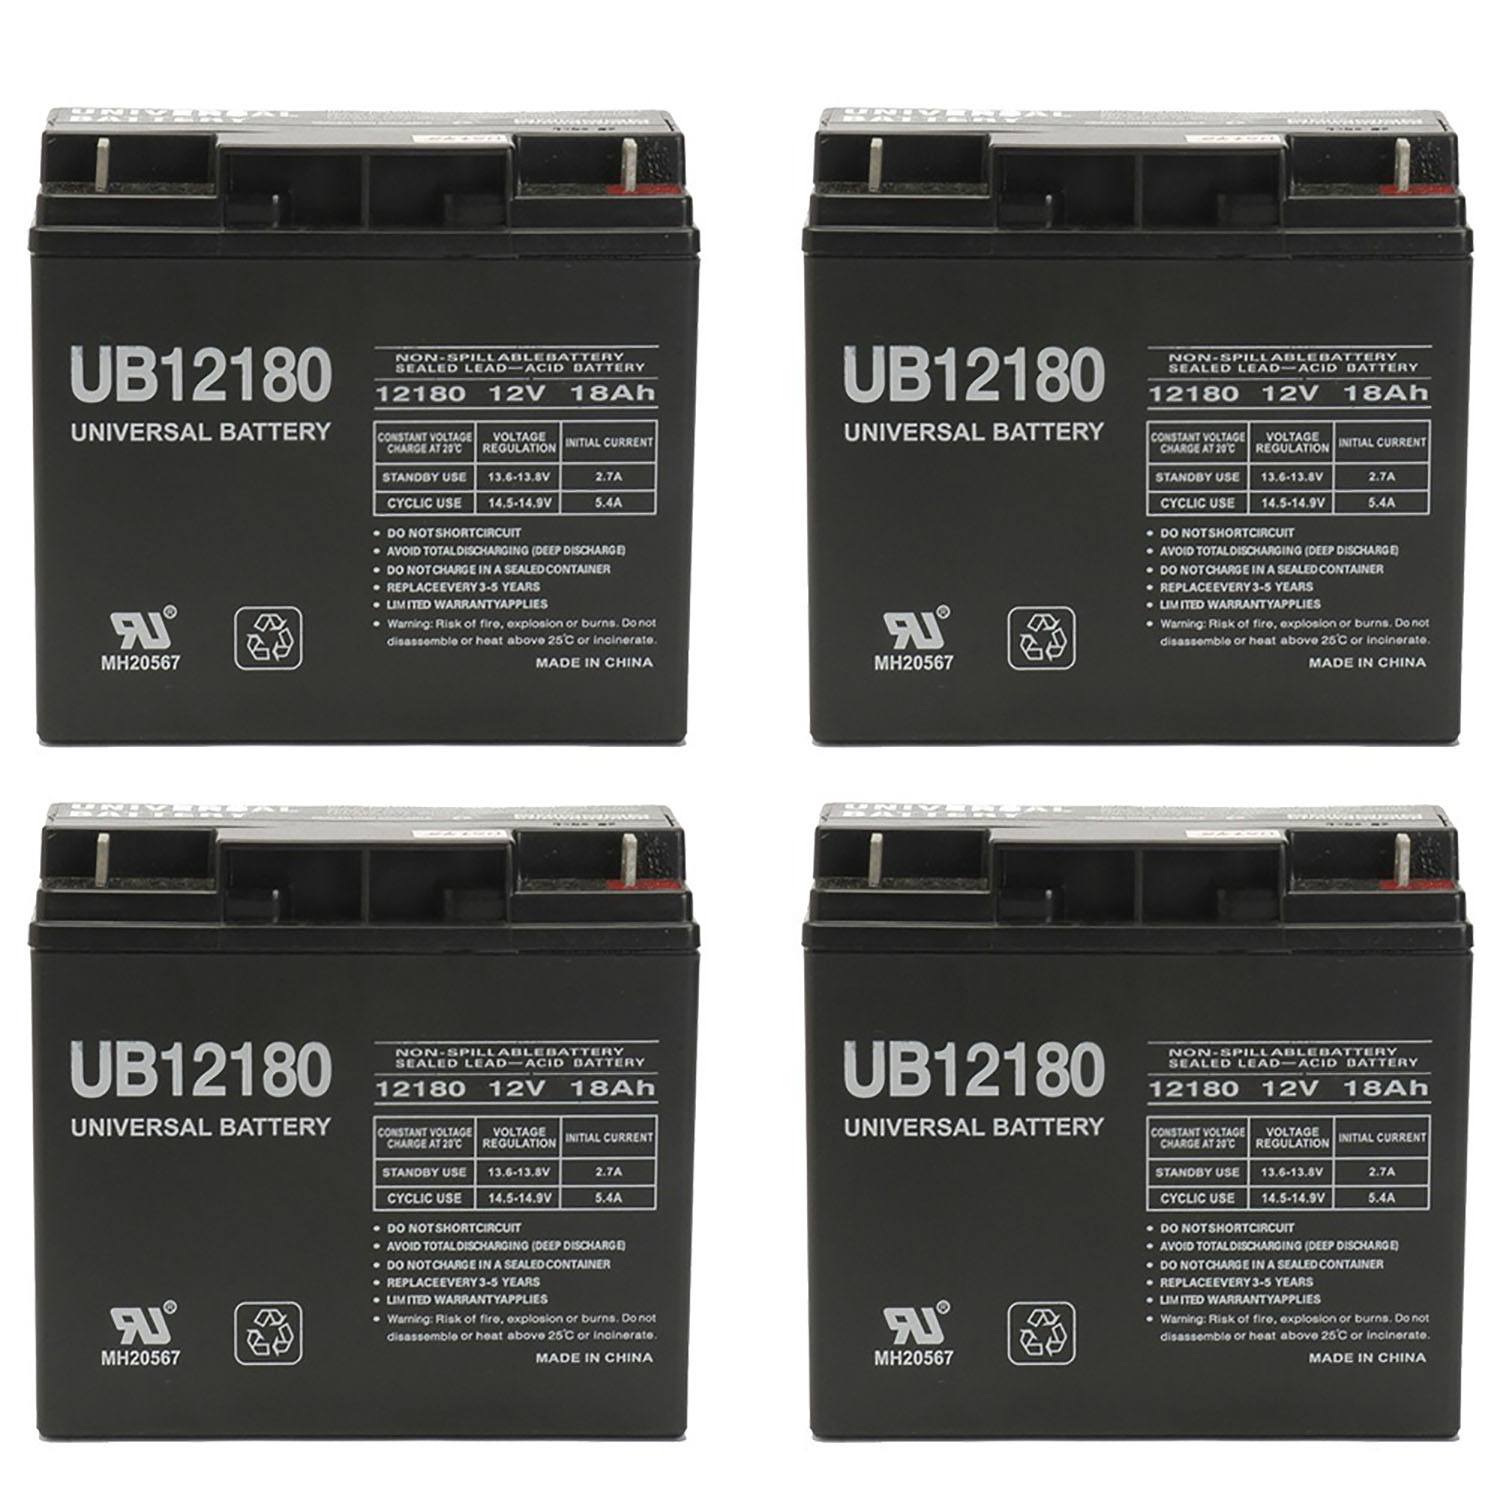 UB12180 SLA 12V 18AH T4 TERMINAL - PACK OF 4